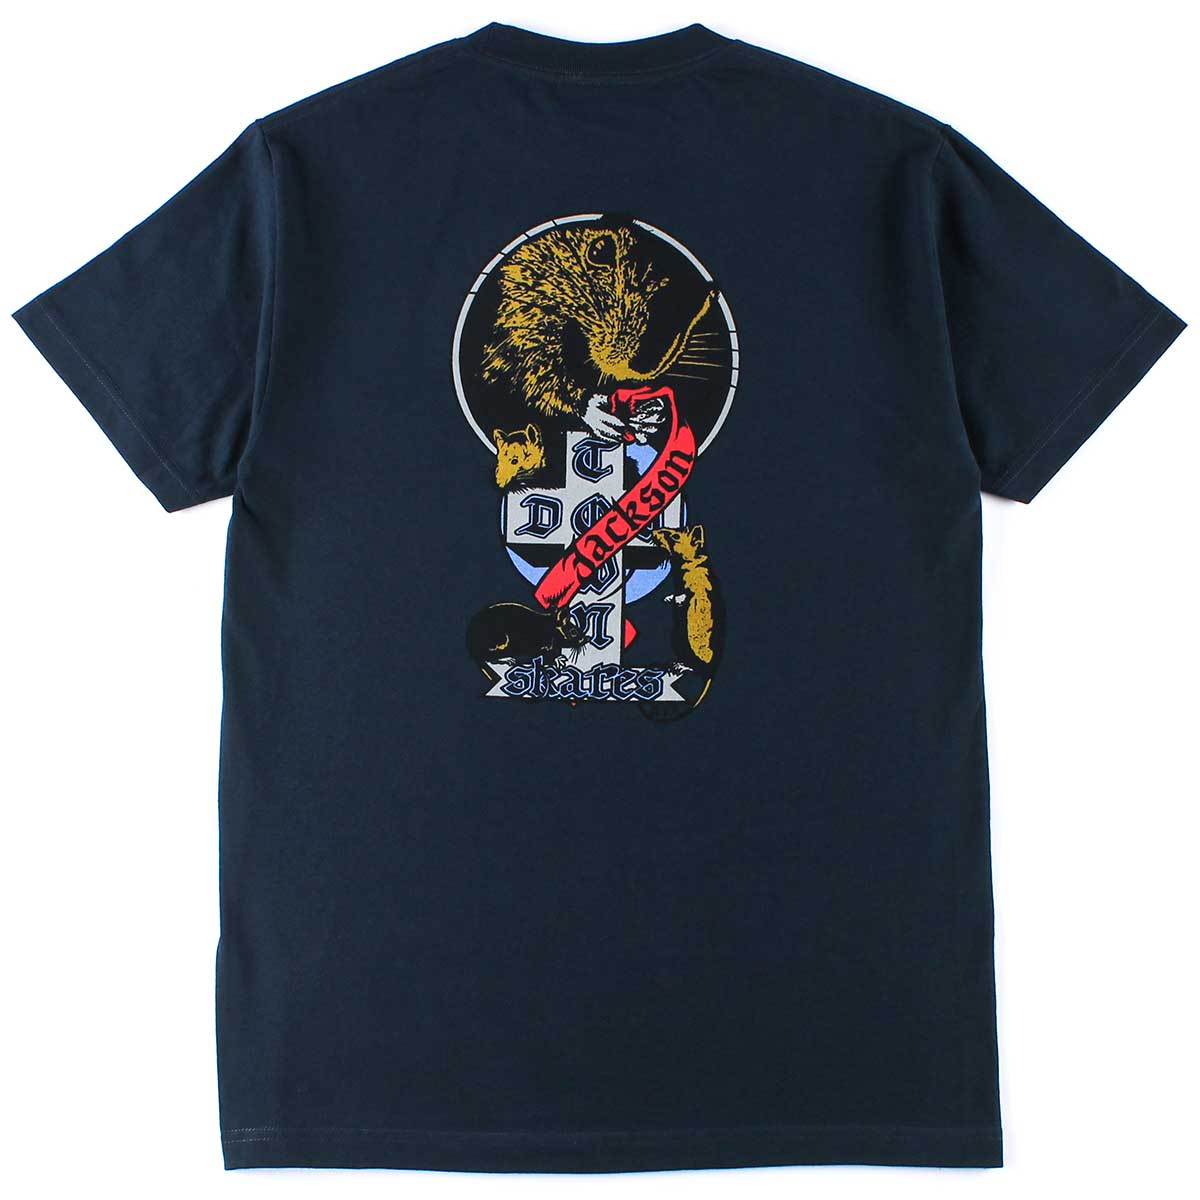 Dogtown Skateboards Tim Jackson Gold Rat T-Shirt - Navy Blue ...